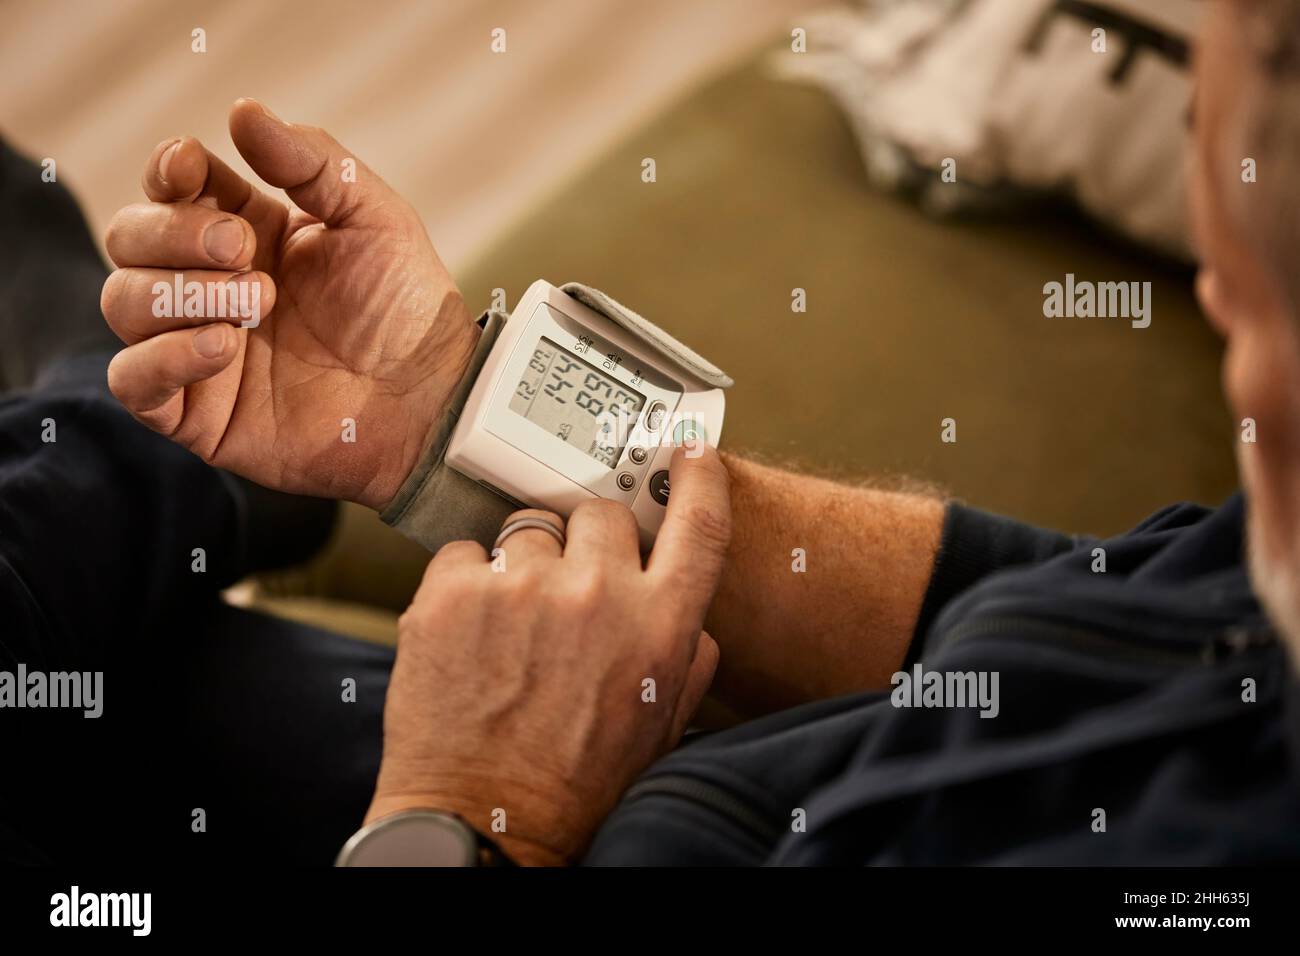 Senior man checking blood pressure at home Stock Photo